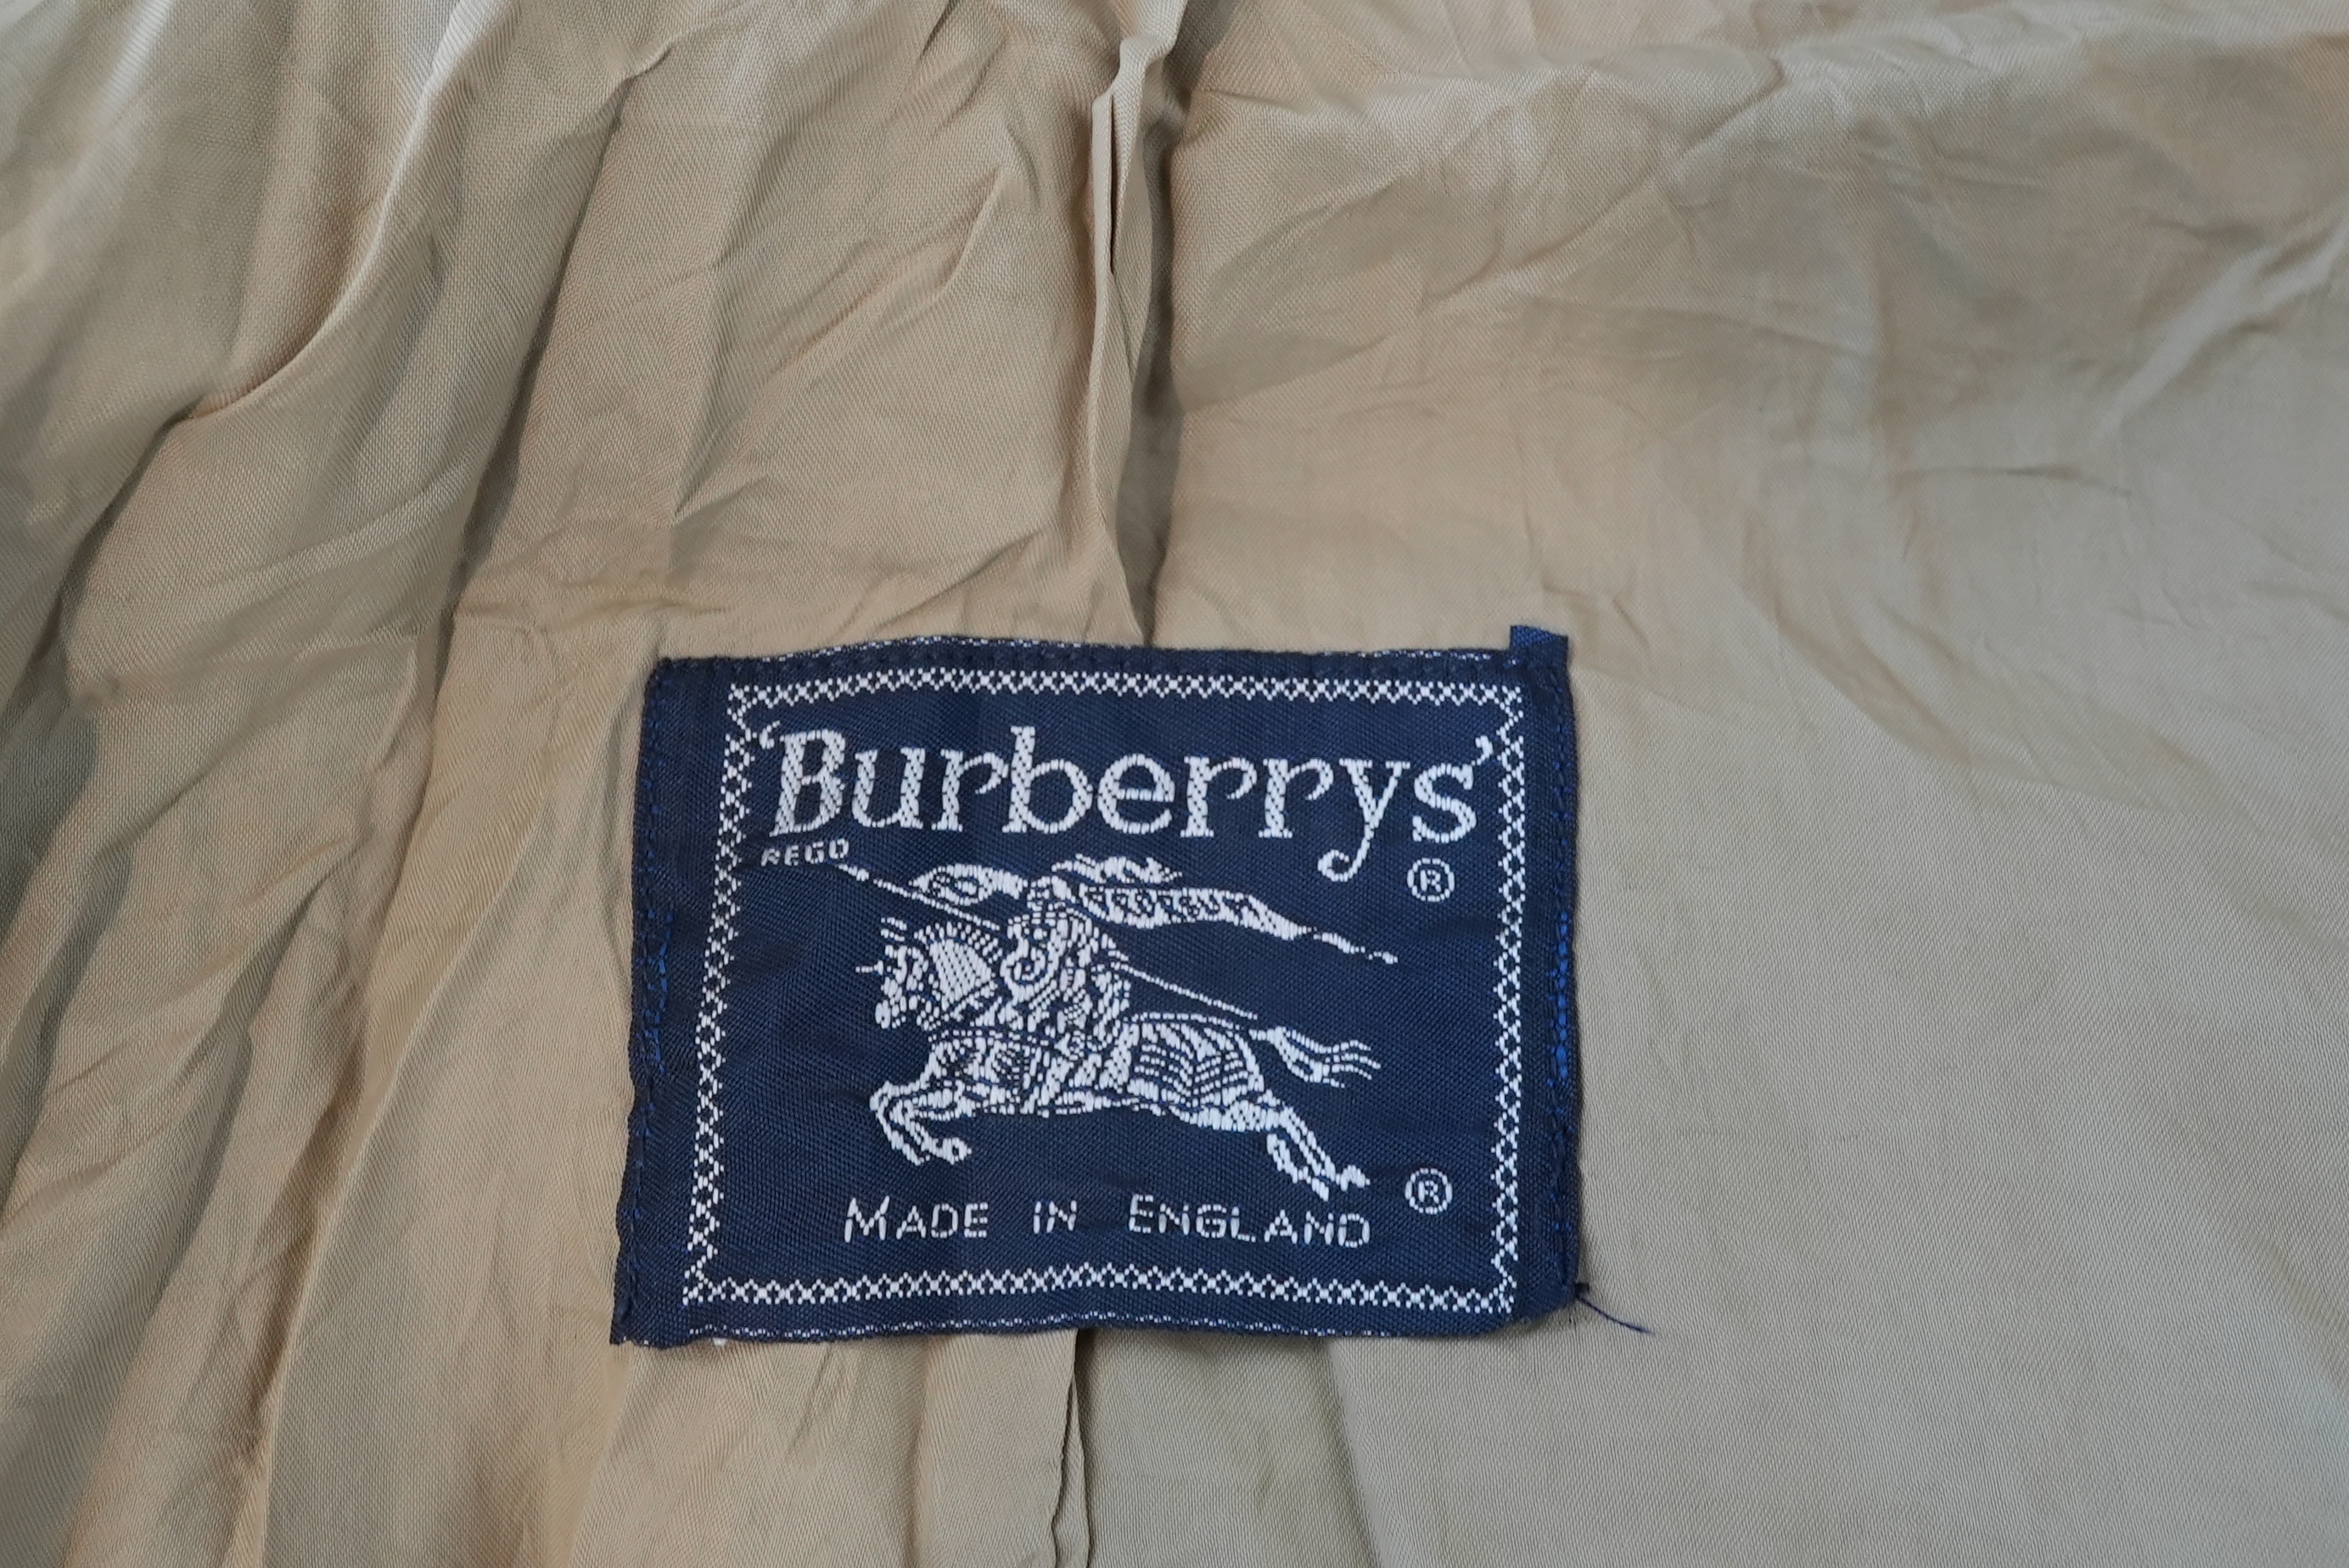 Burberry Trenchcoat - Image 3 of 3